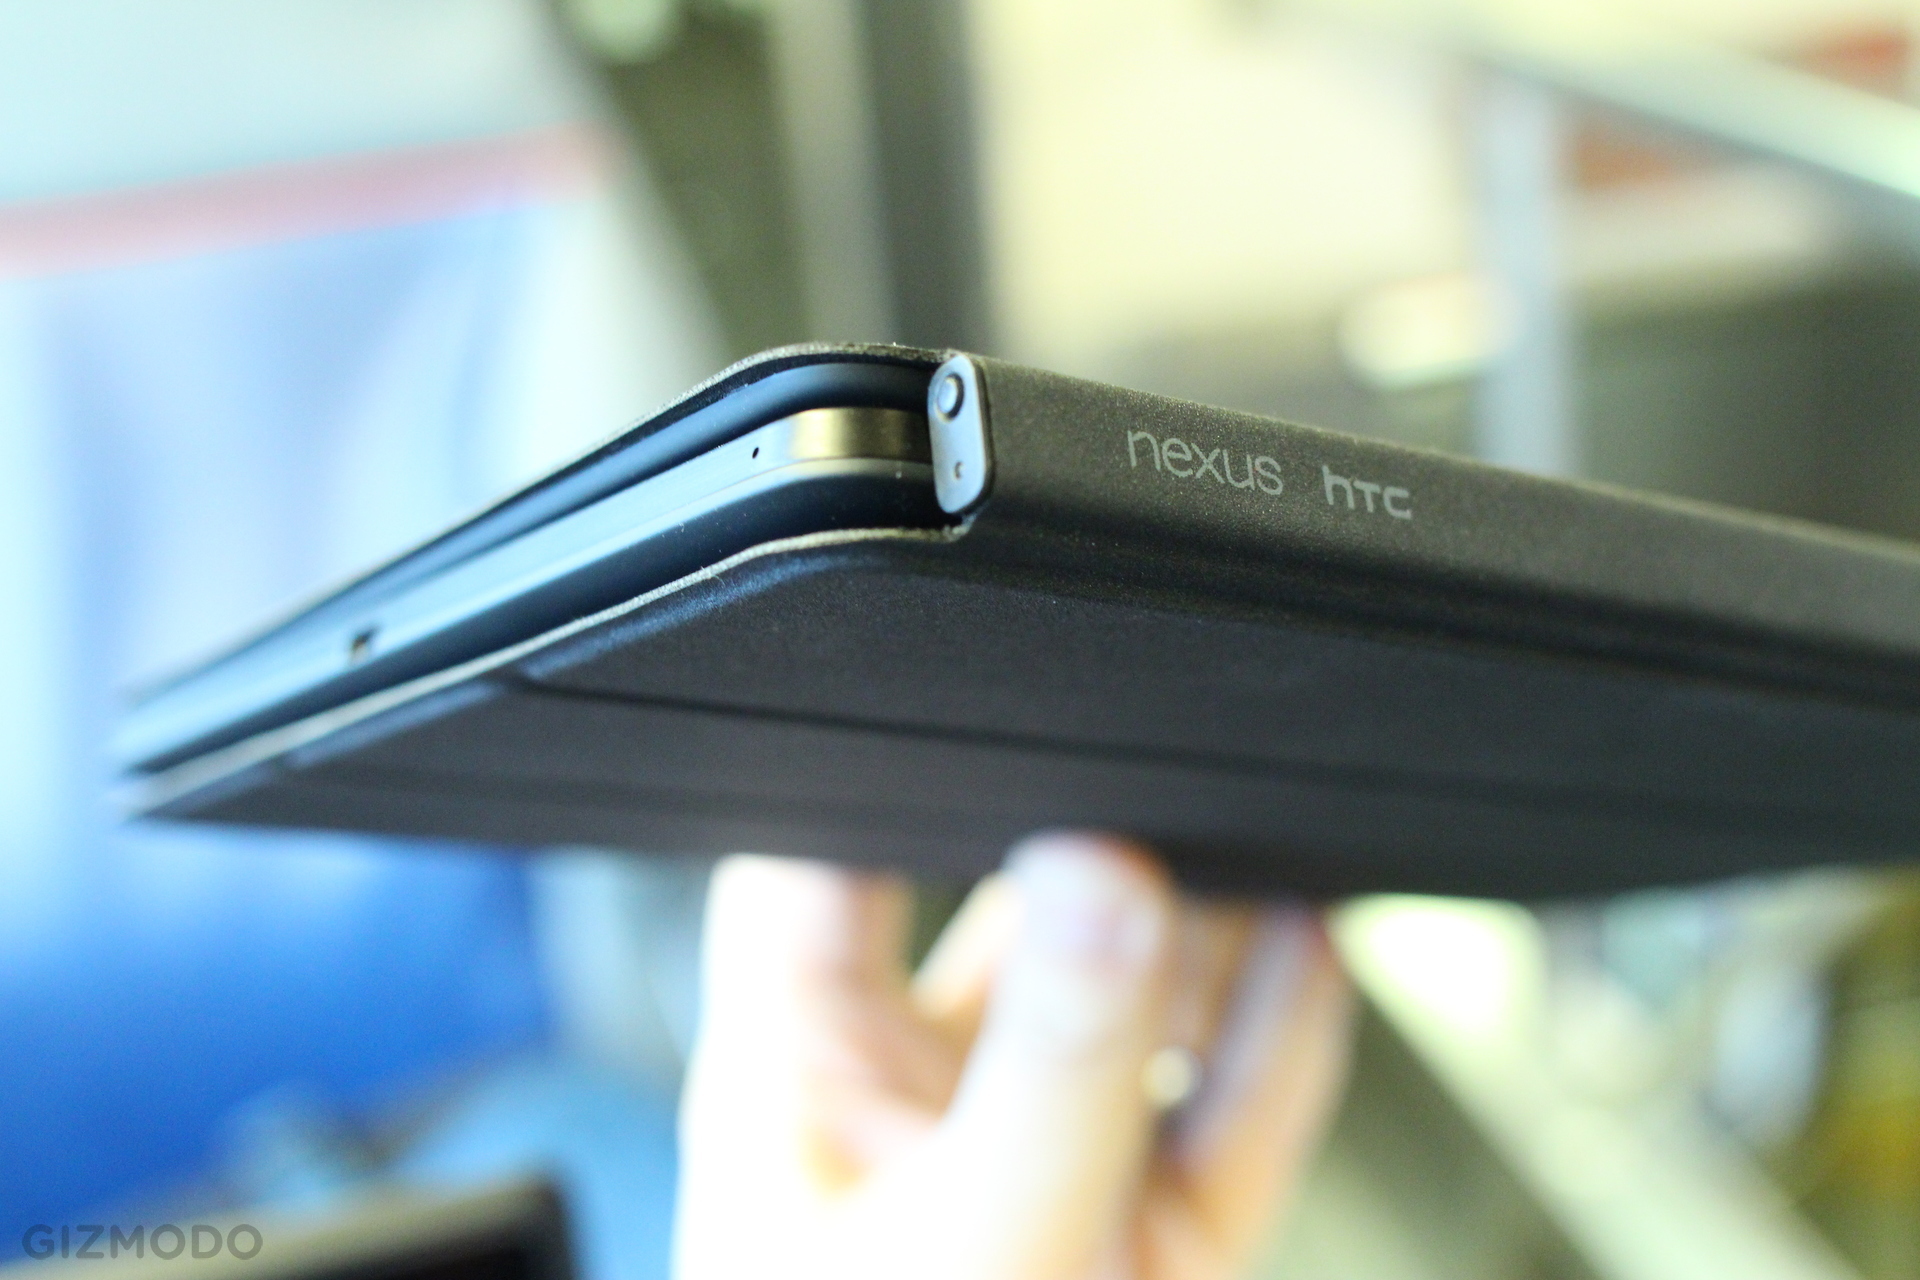 Nexus 9 Keyboard Folio Review: Keys That Please